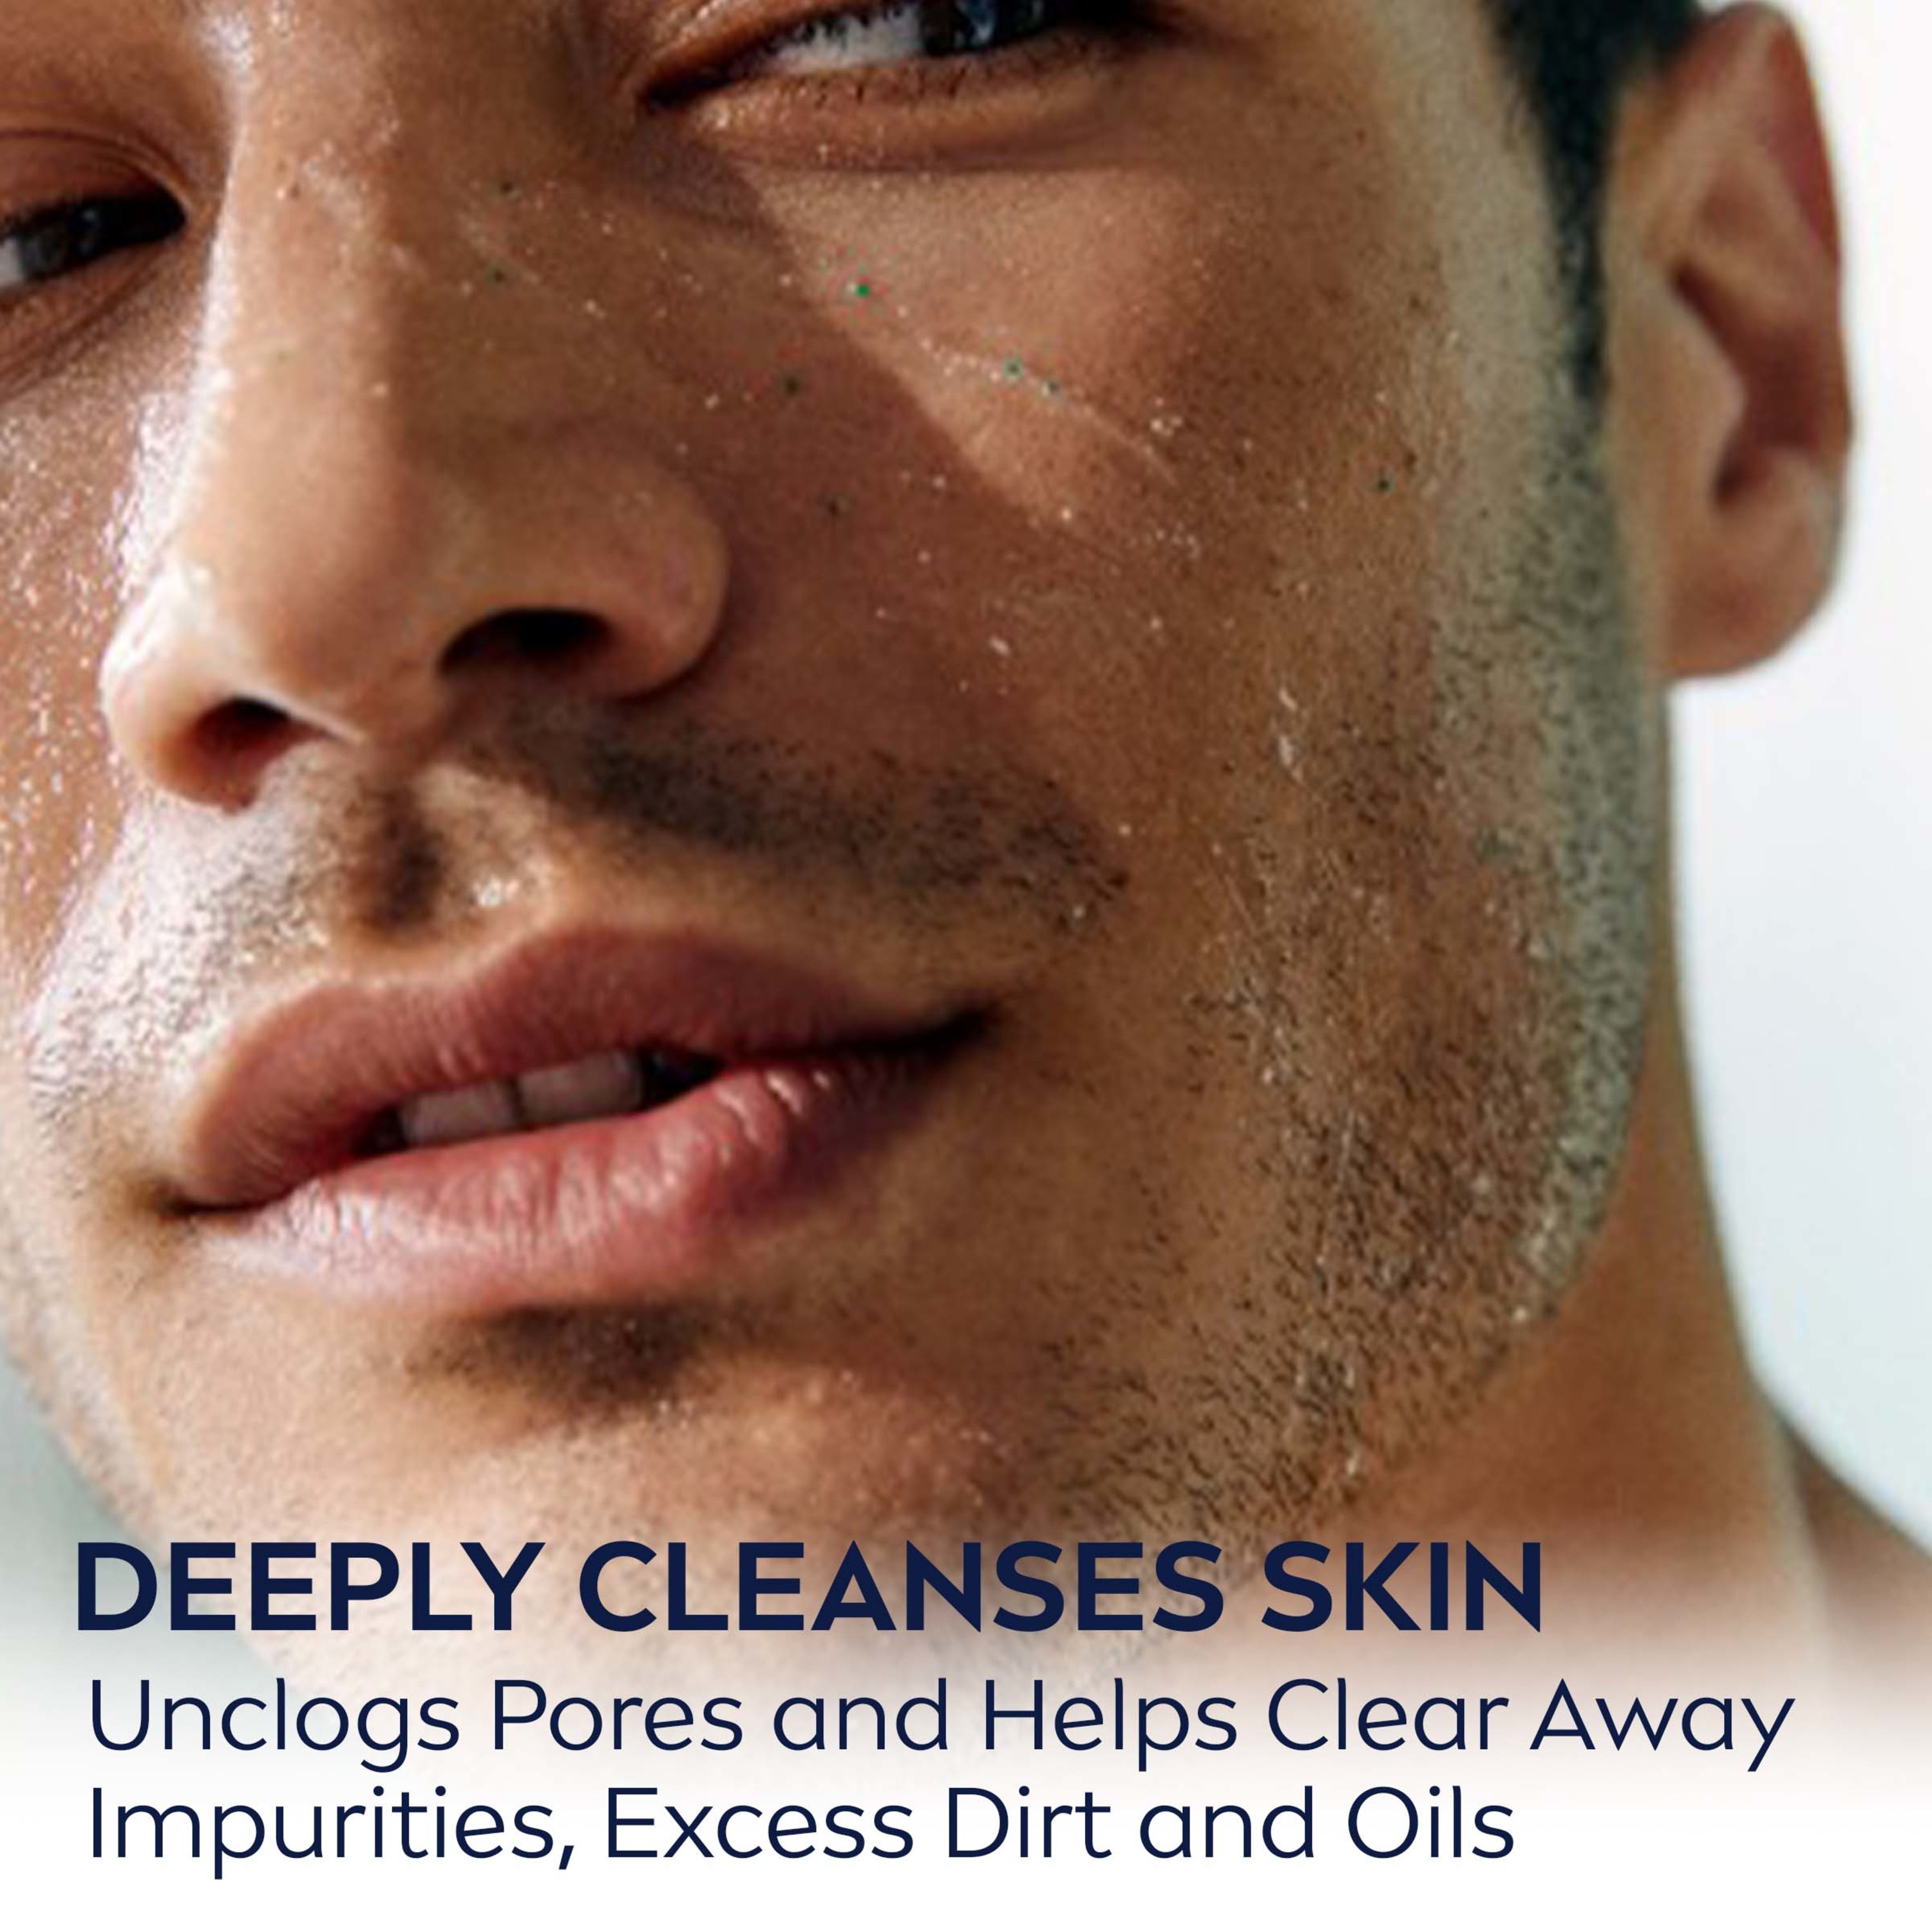 NIVEA MEN Maximum Hydration Deep Cleaning Face Scrub with Aloe Vera, 4.4 Oz Tube - image 3 of 13